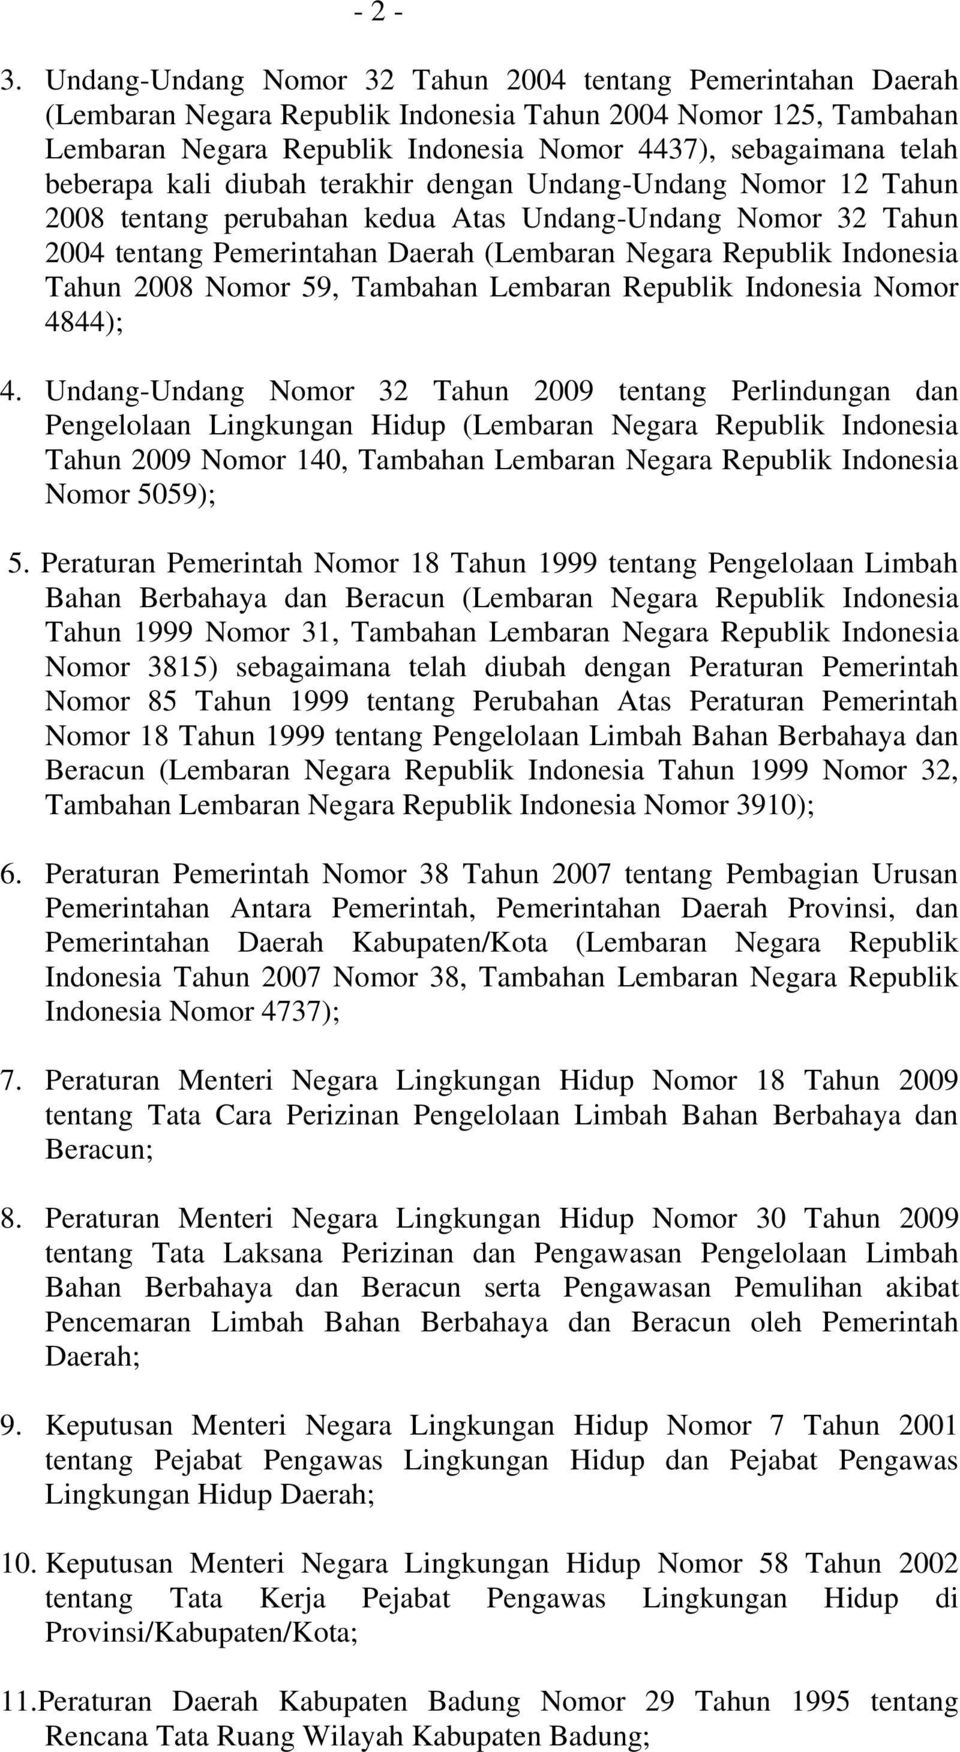 beberapa kali diubah terakhir dengan Undang-Undang Nomor 12 Tahun 2008 tentang perubahan kedua Atas Undang-Undang Nomor 32 Tahun 2004 tentang Pemerintahan Daerah (Lembaran Negara Republik Indonesia